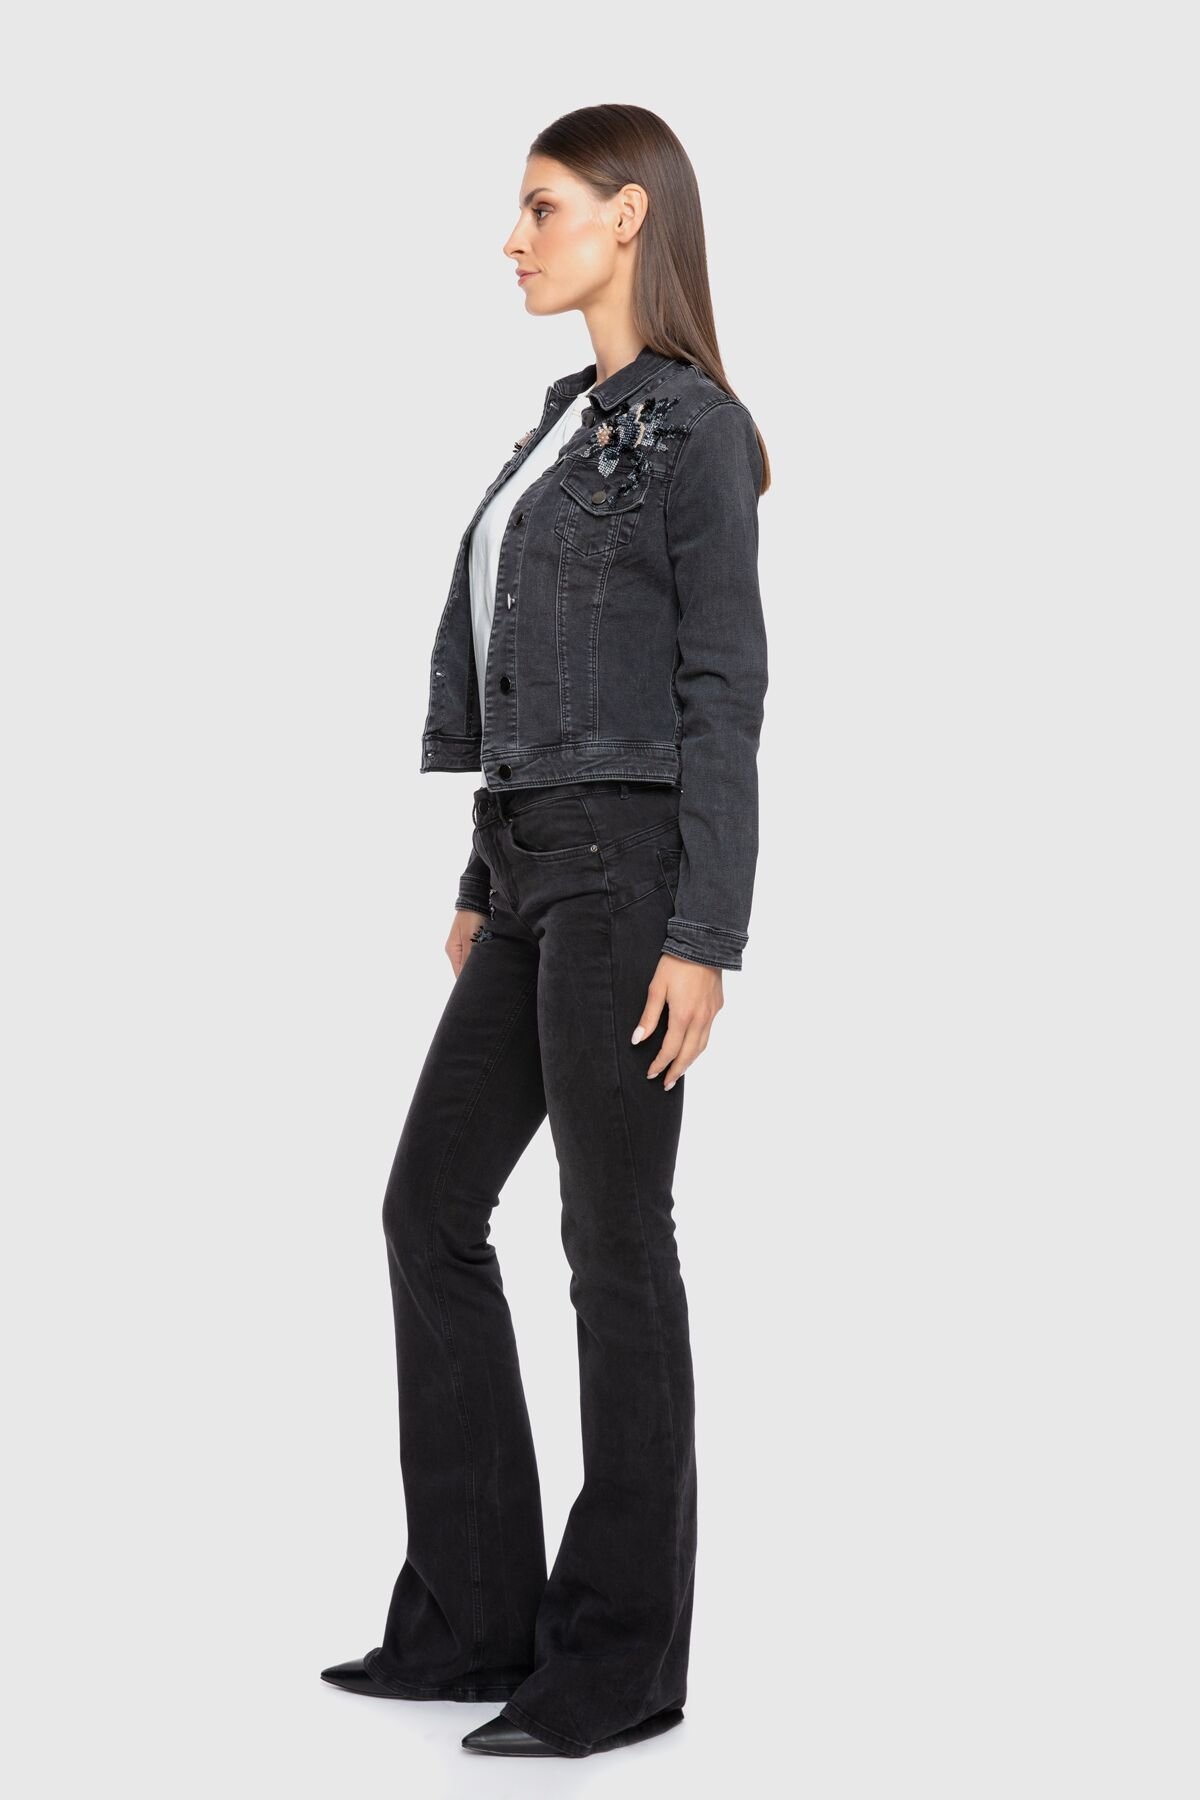 Boncuk İşleme Detaylı Siyah Jean Ceket